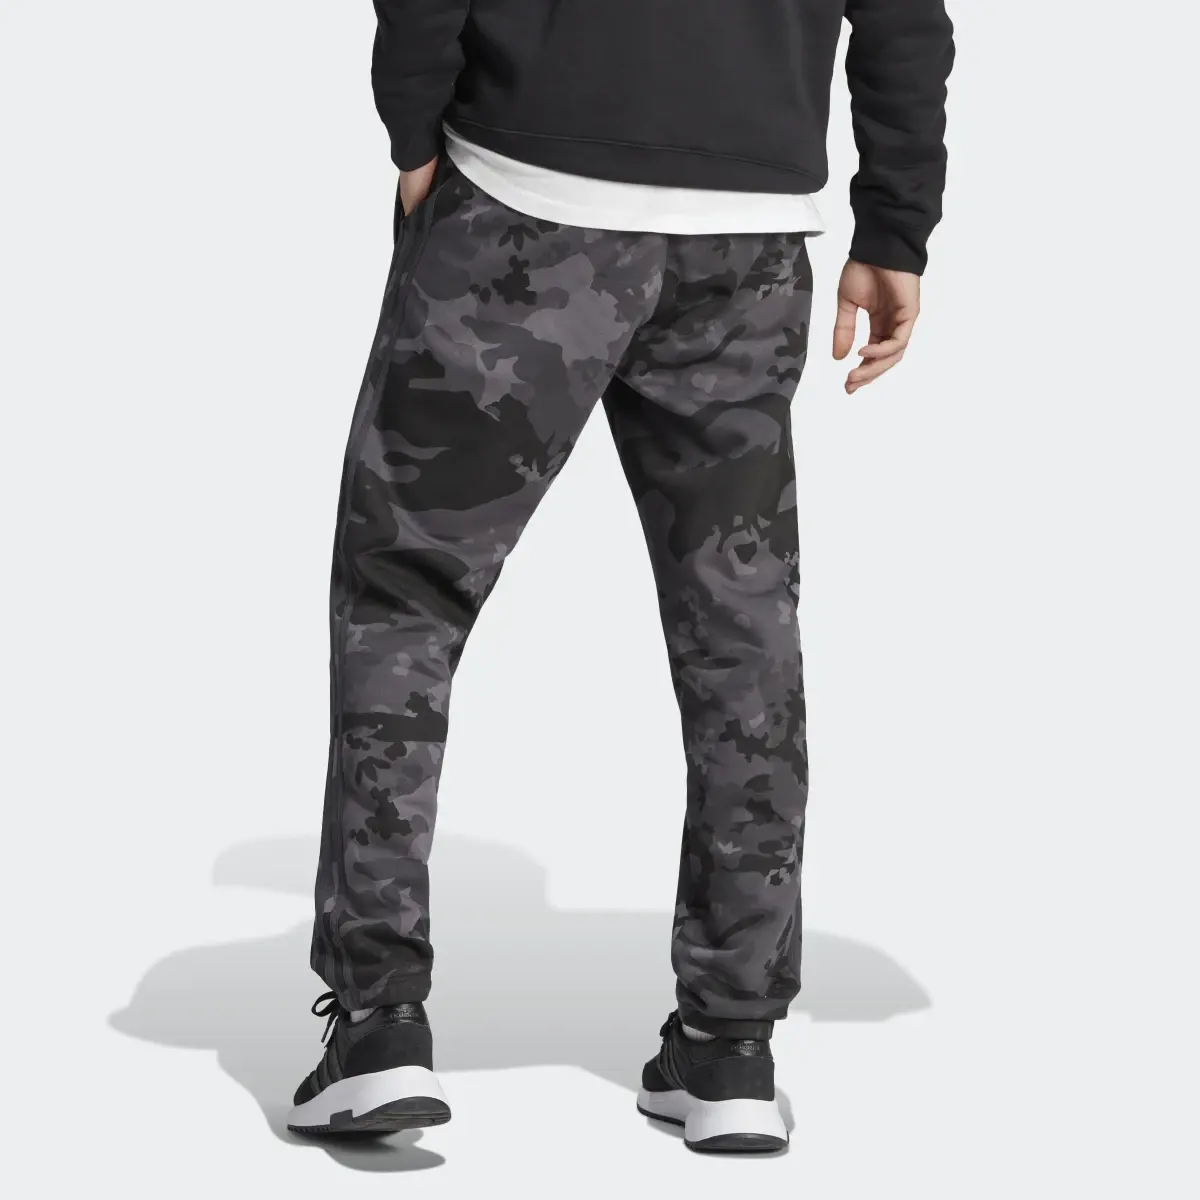 Adidas Graphics Camo Sweat Pants. 2